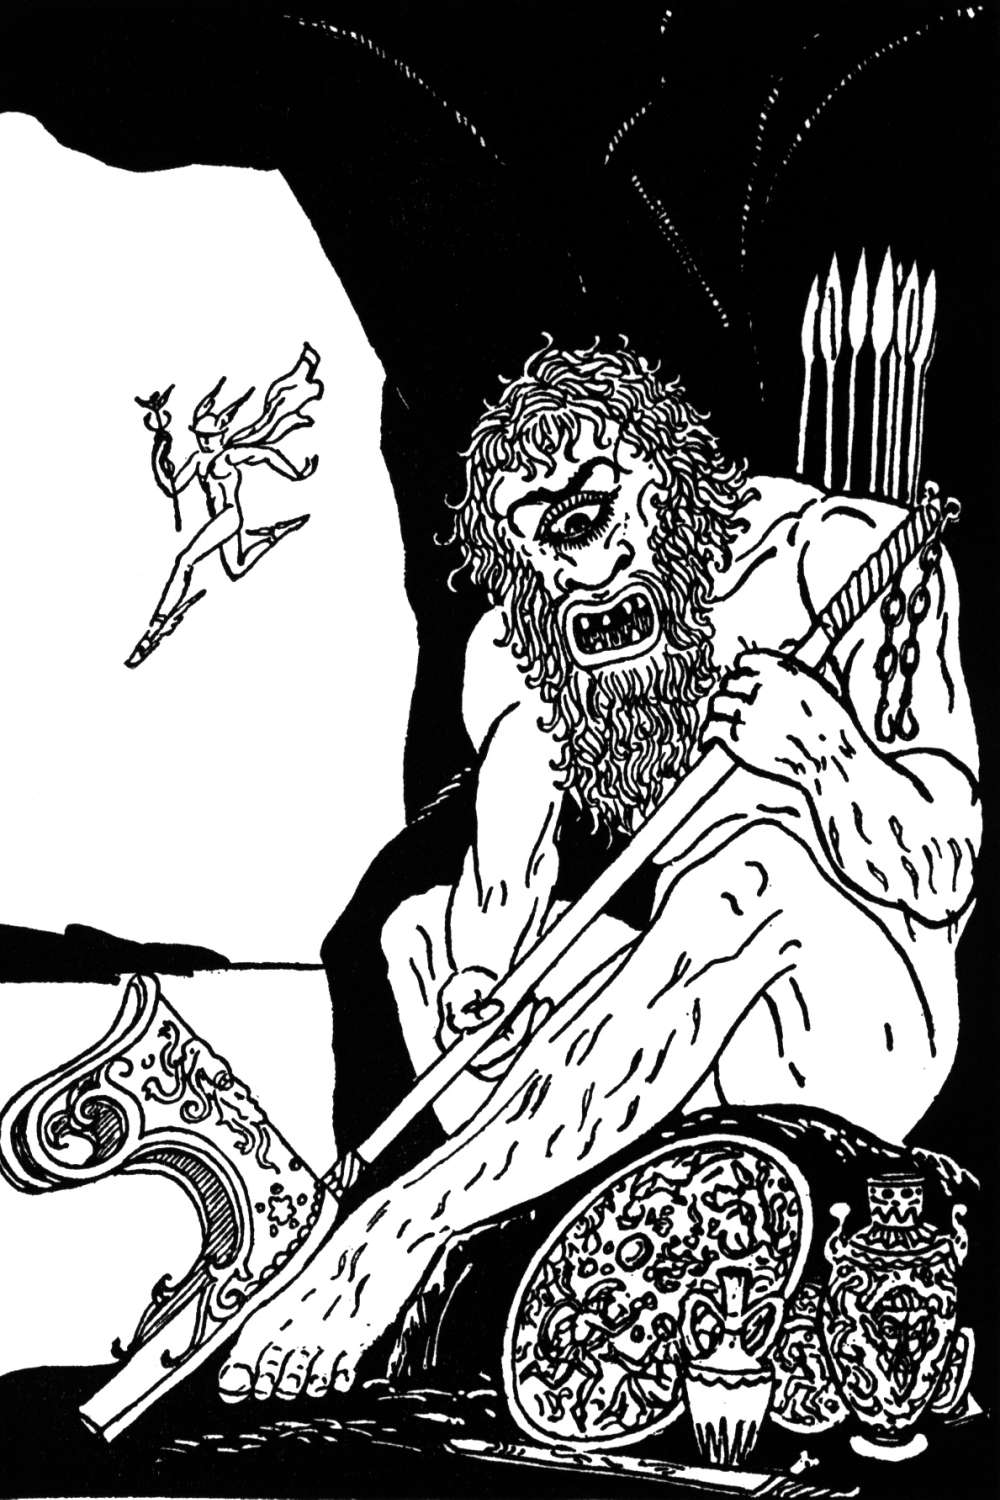 Odysseus: A Loyal Hero In The Odyssey